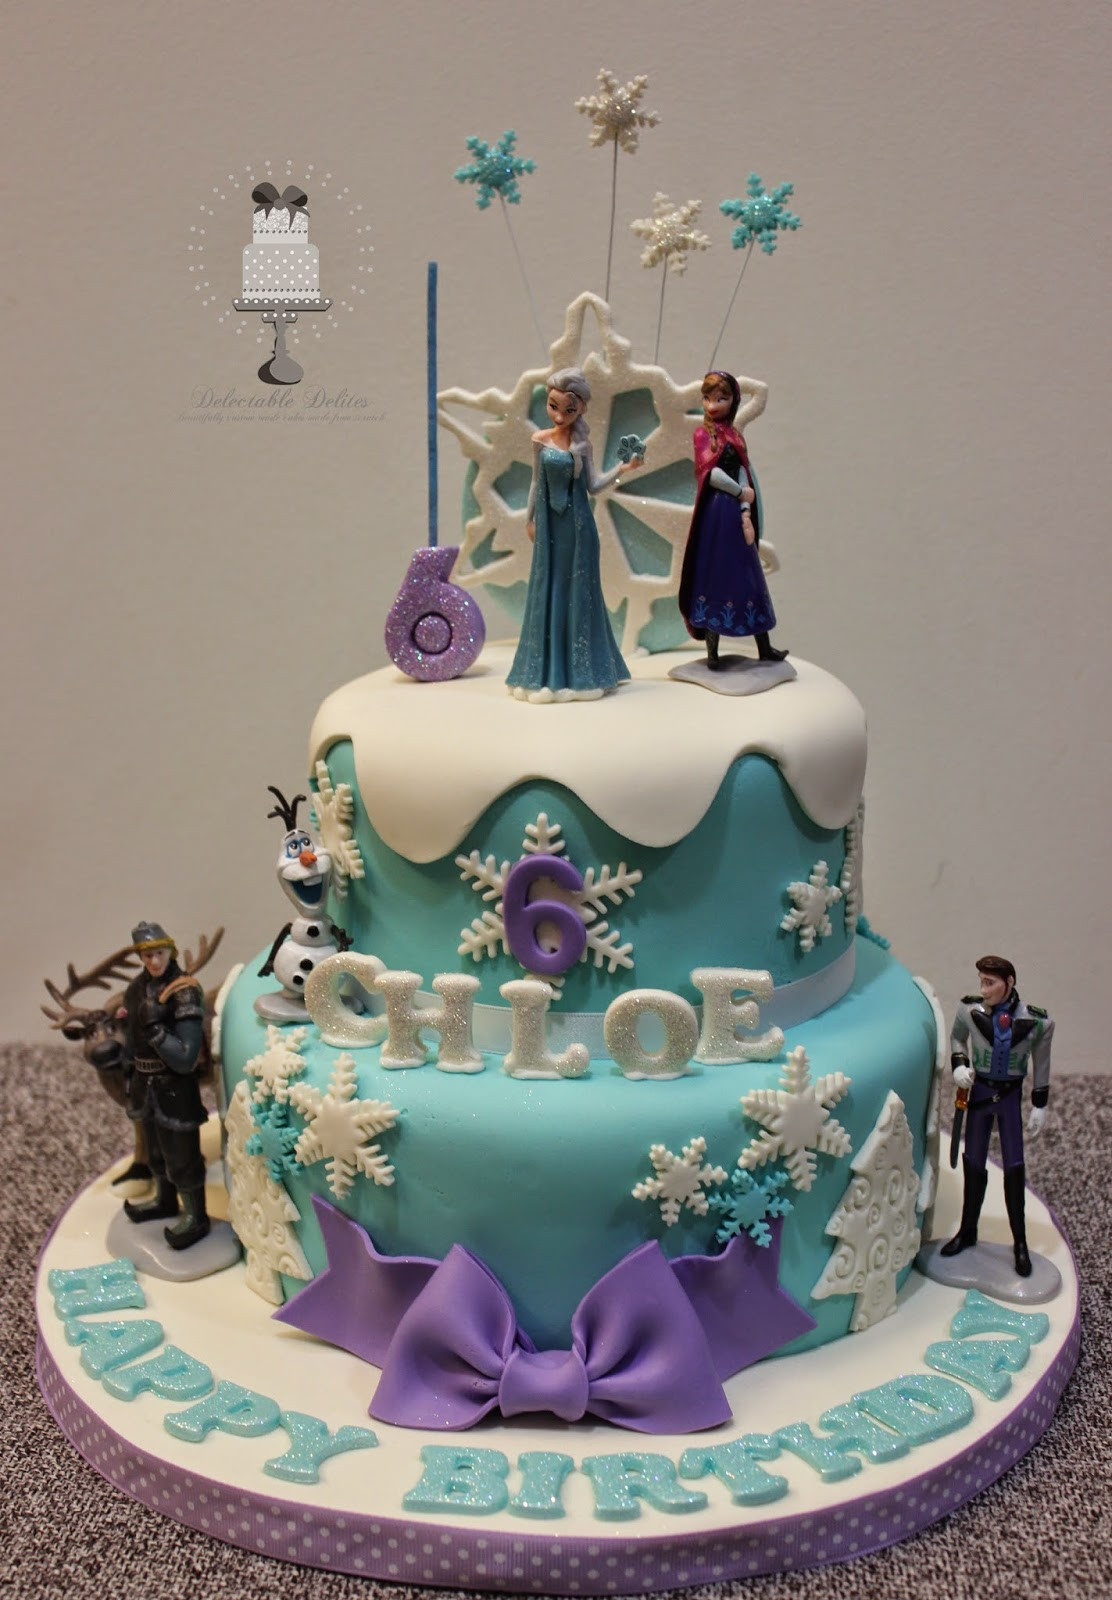 Frozen Birthday Cakes Ideas
 Delectable Delites Frozen cake for Chole s 6th birthday